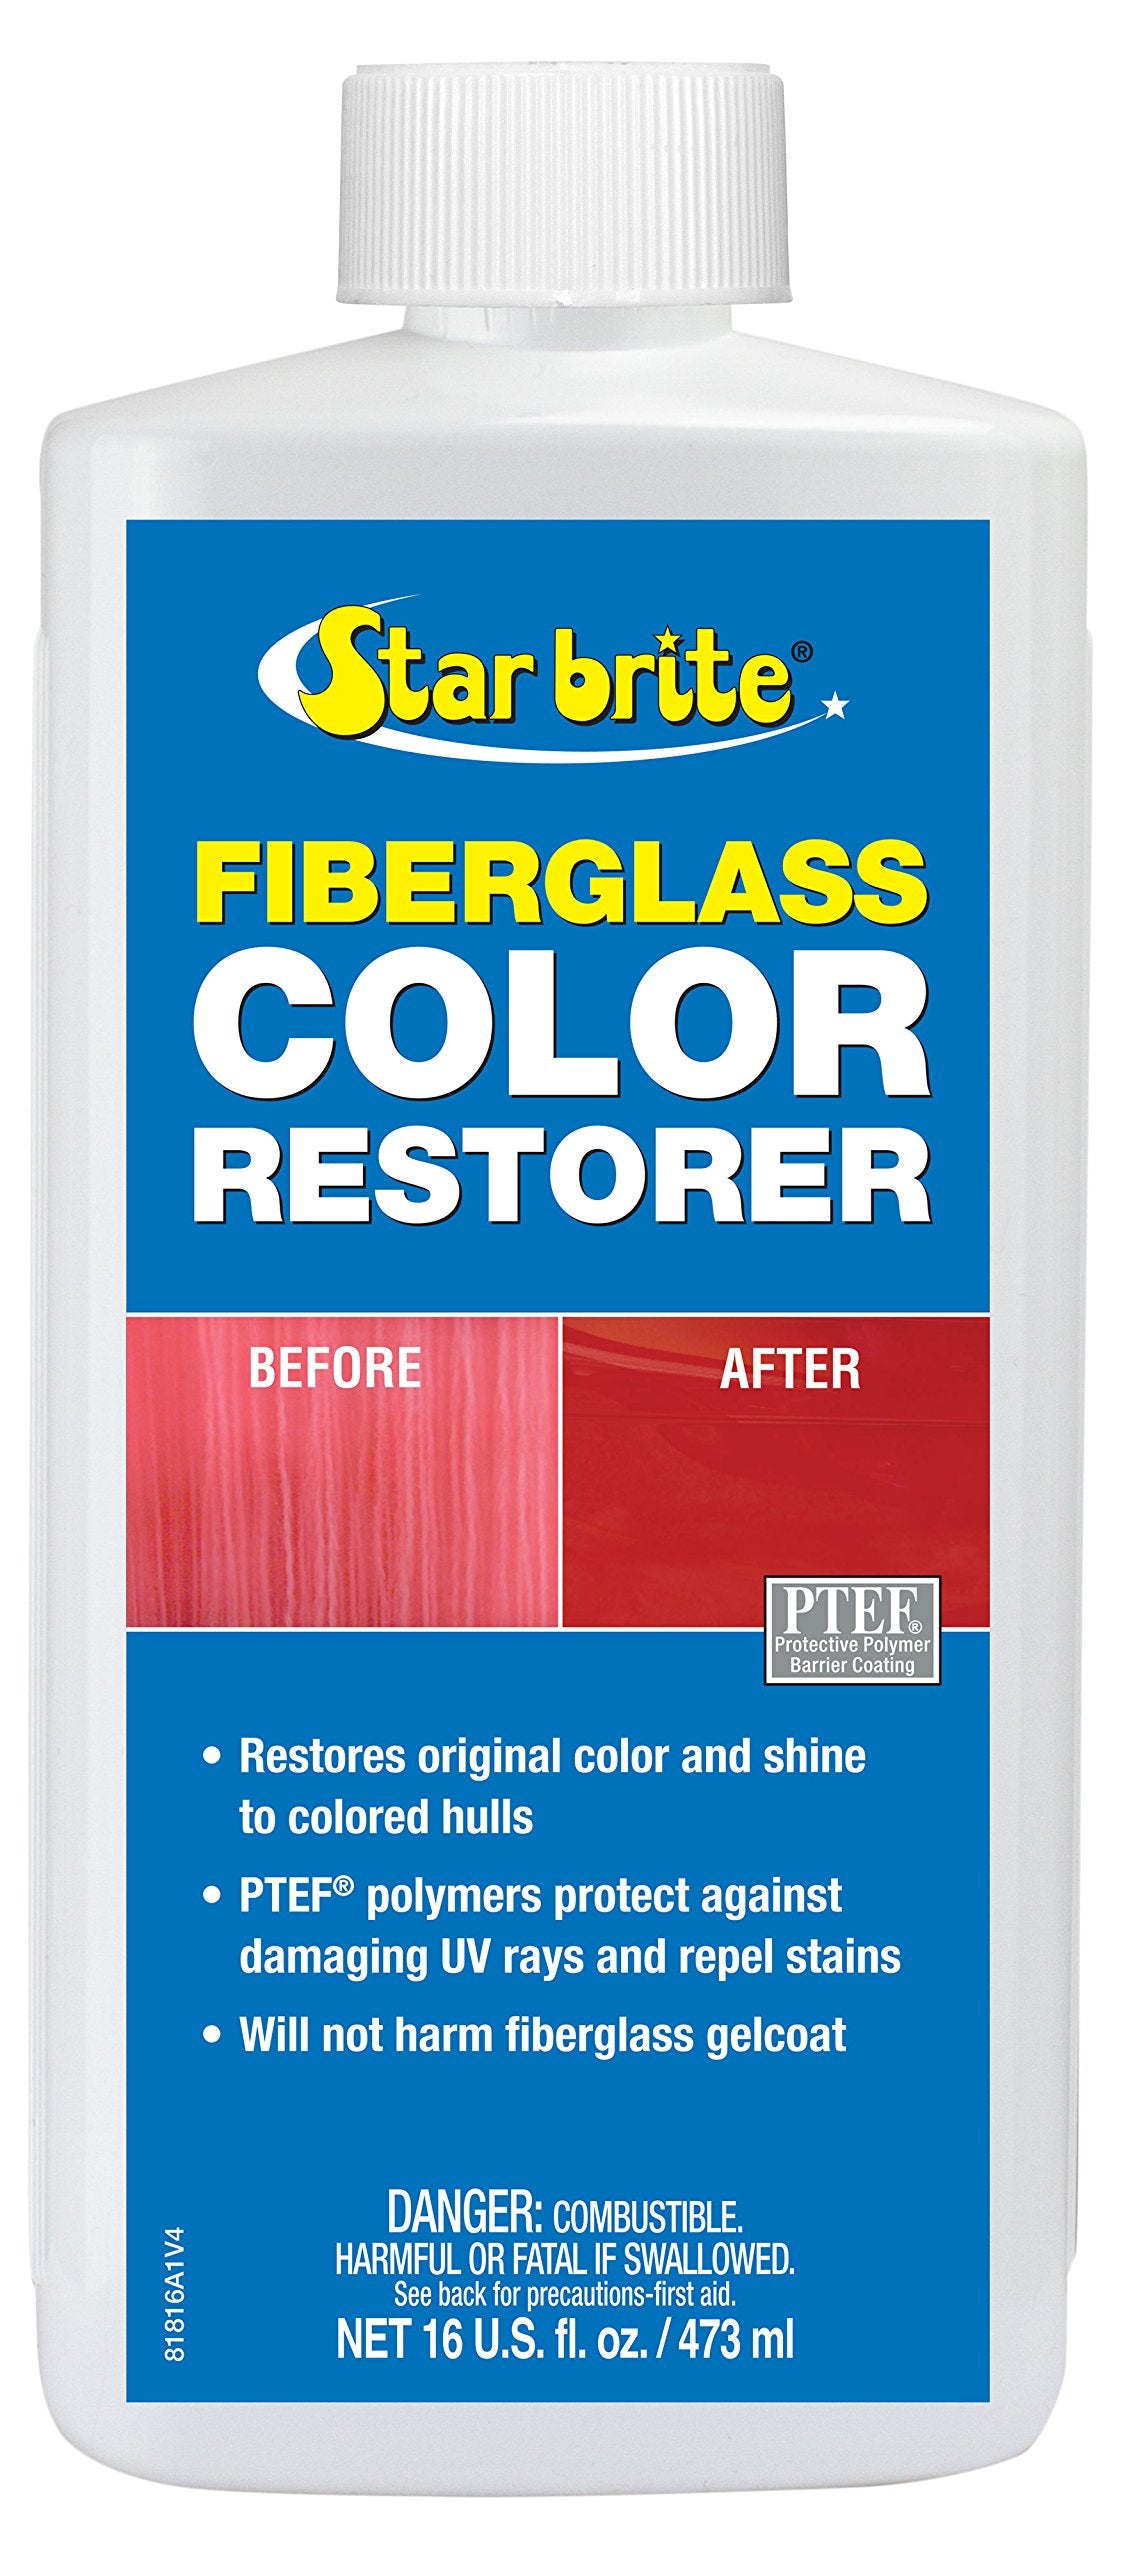 Starbrite Fiberglass Color Restorer w/PTEF 16oz 81816 | 24